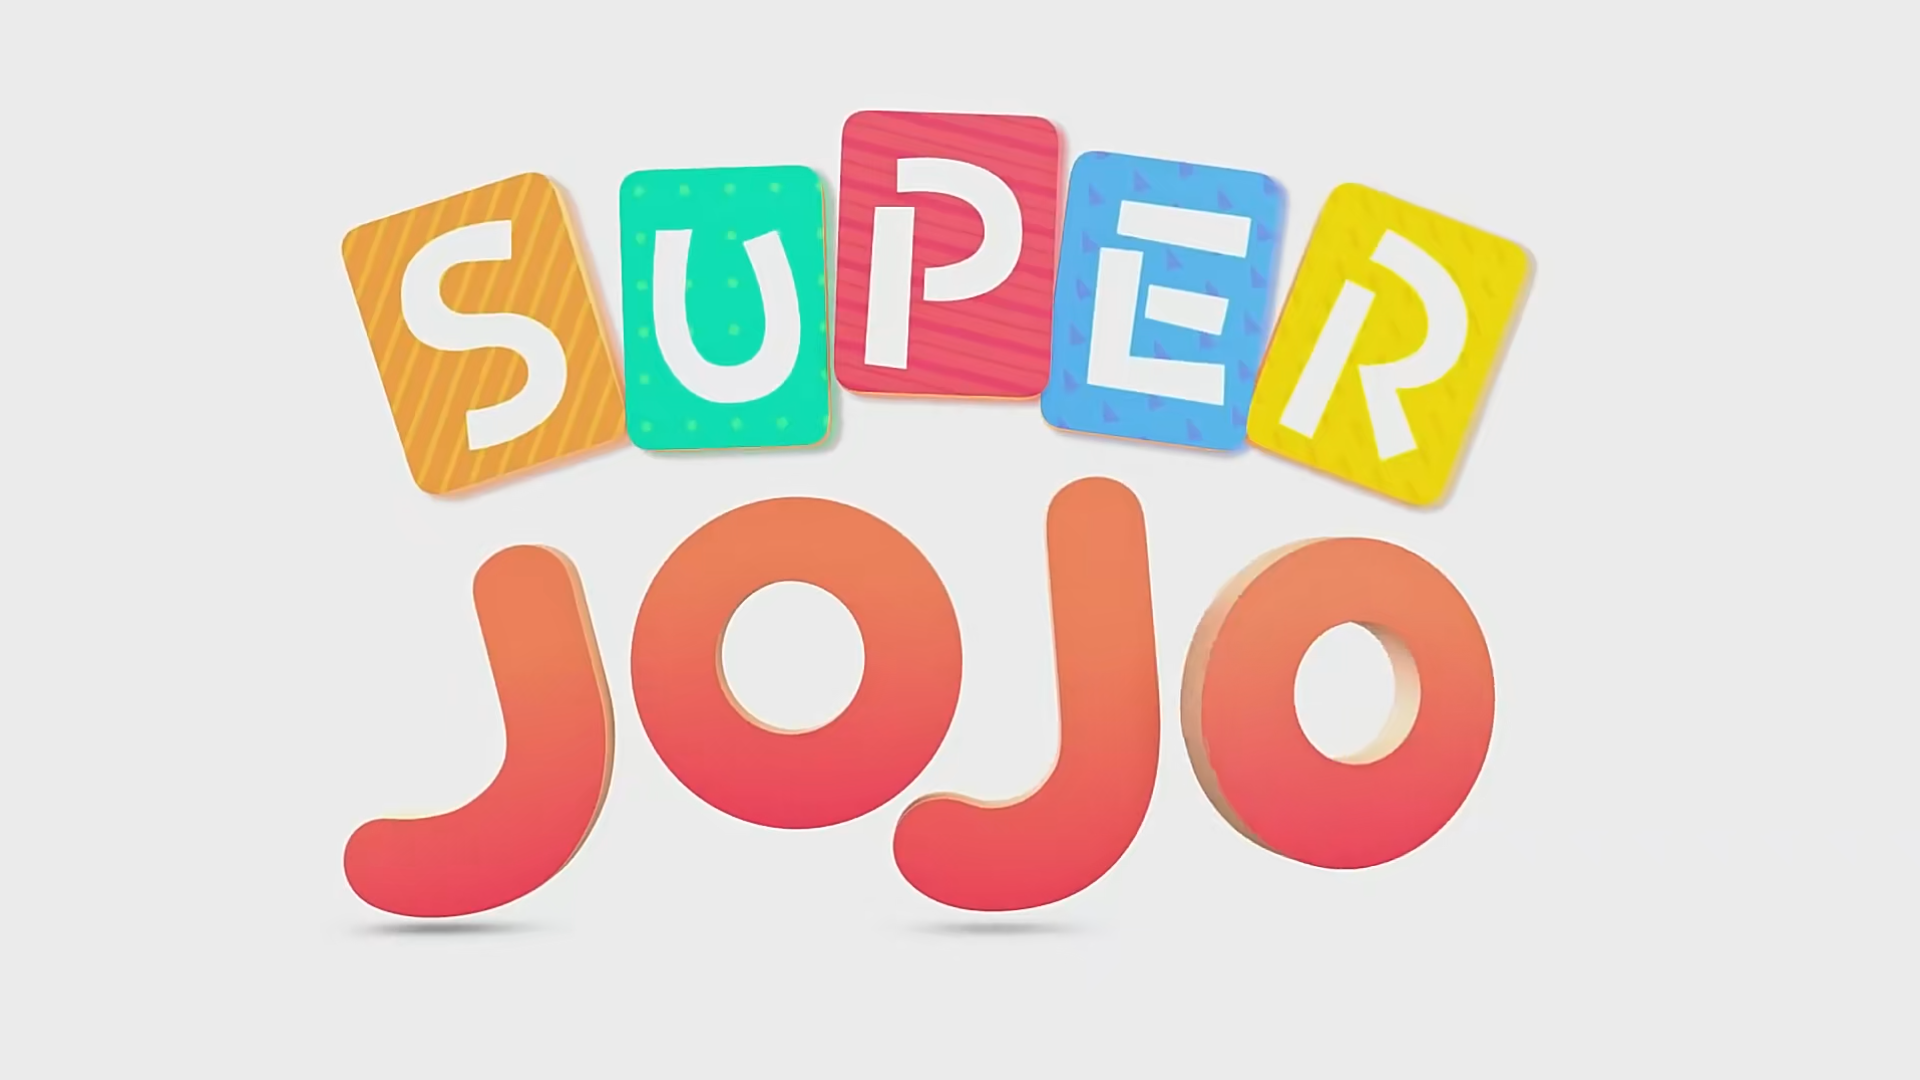 《Super JoJo》超级宝贝JOJO英文版 [全102集英文字幕1080P] - 虾米英语网-英语启蒙动画原版英语教材绘本杂志有声书纪录片下载虾米英语网